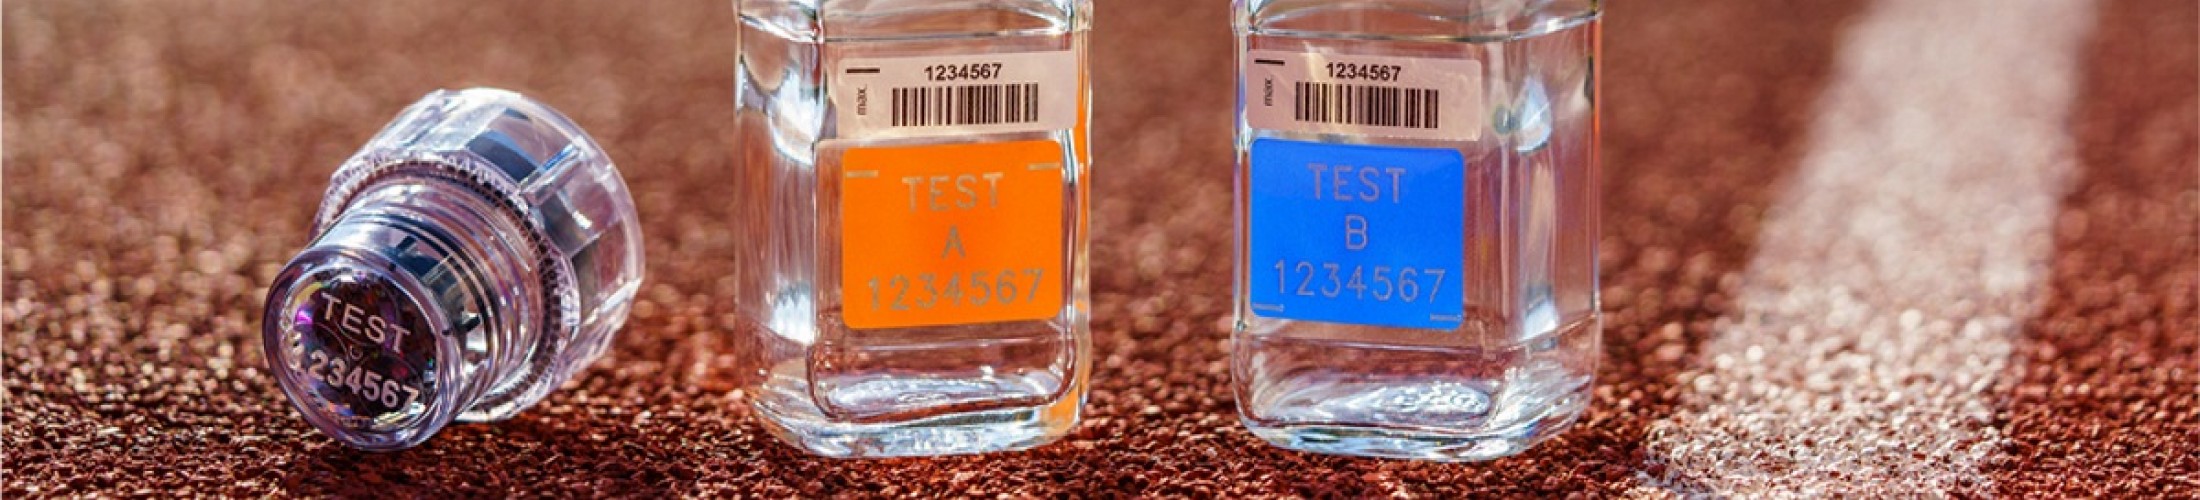 Empty testing bottles on an athletics track.